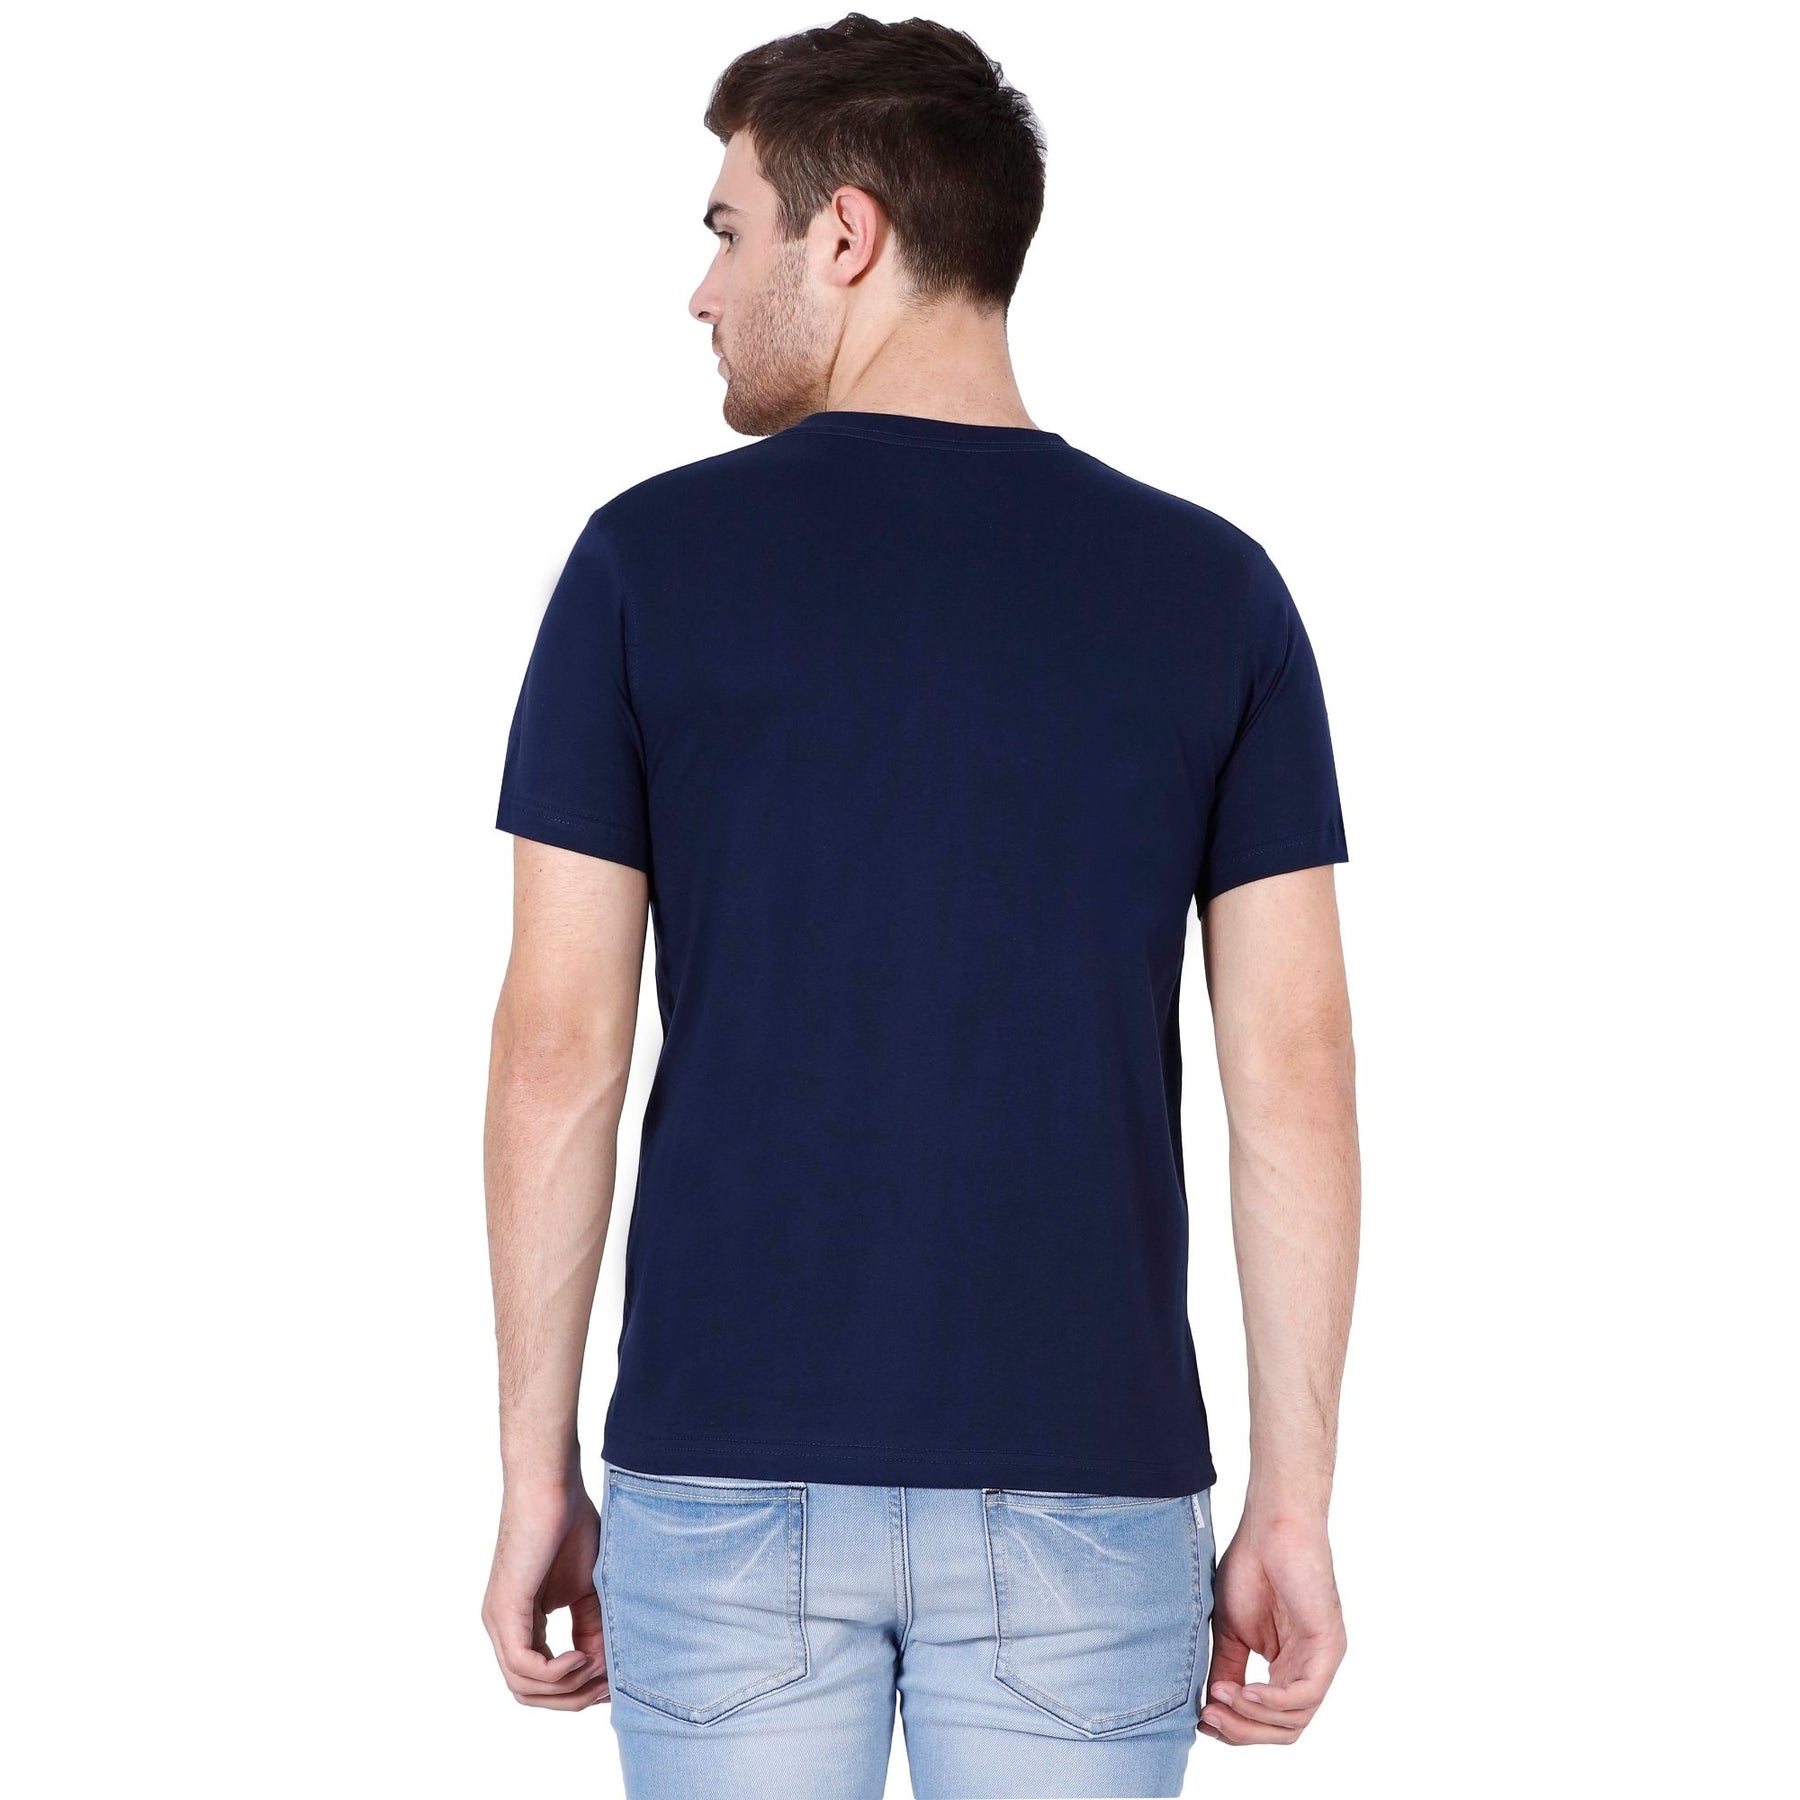 Plain Cotton Men's Full Sleeves V-Neck T-Shirt at Rs 220/piece in Mumbai